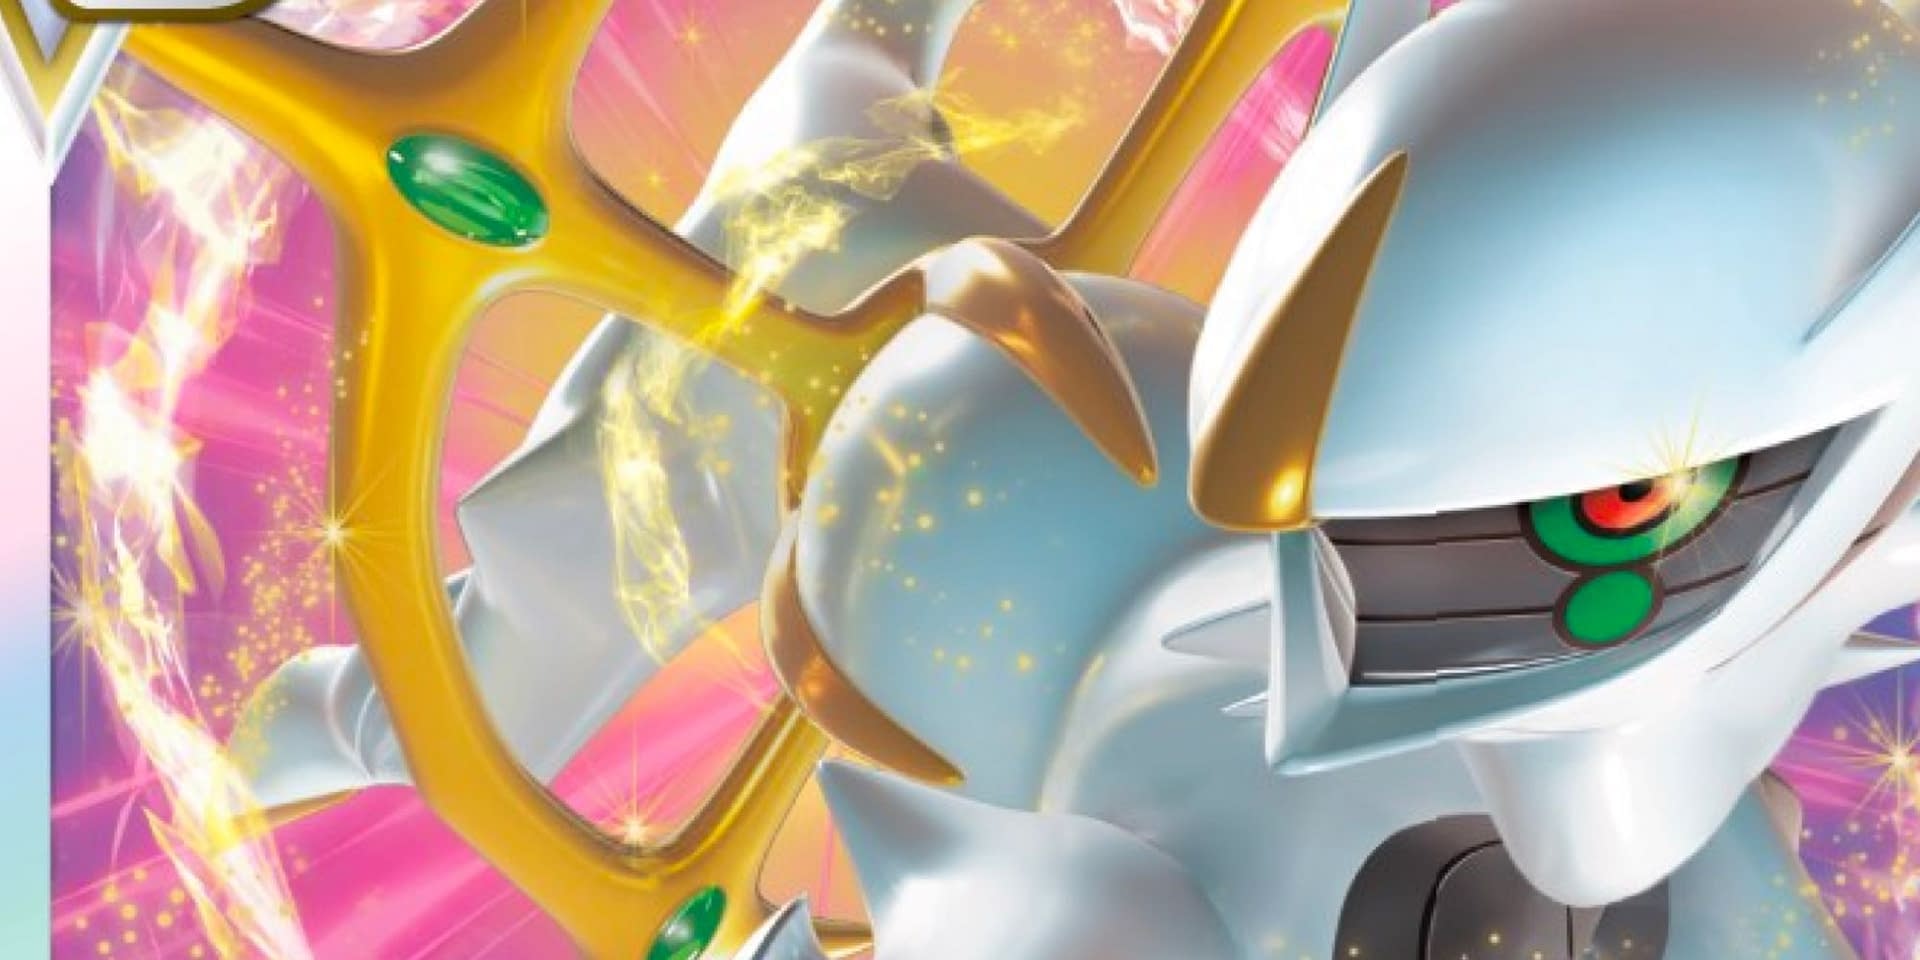 Pokemon Supreme Wallpapers - Top Free Pokemon Supreme Backgrounds